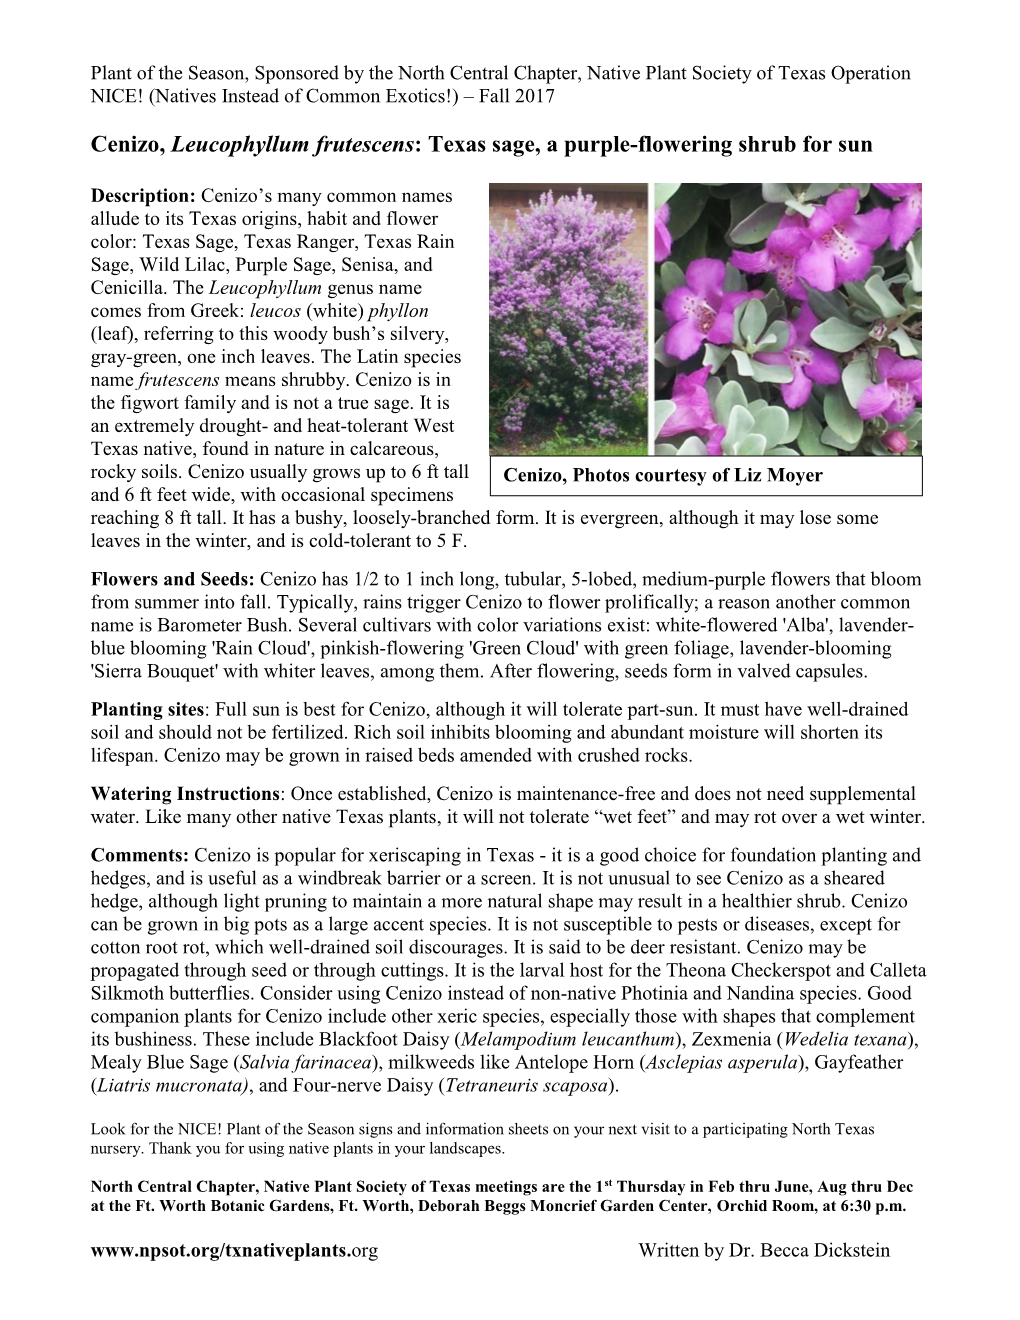 Cenizo, Leucophyllum Frutescens: Texas Sage, a Purple-Flowering Shrub for Sun